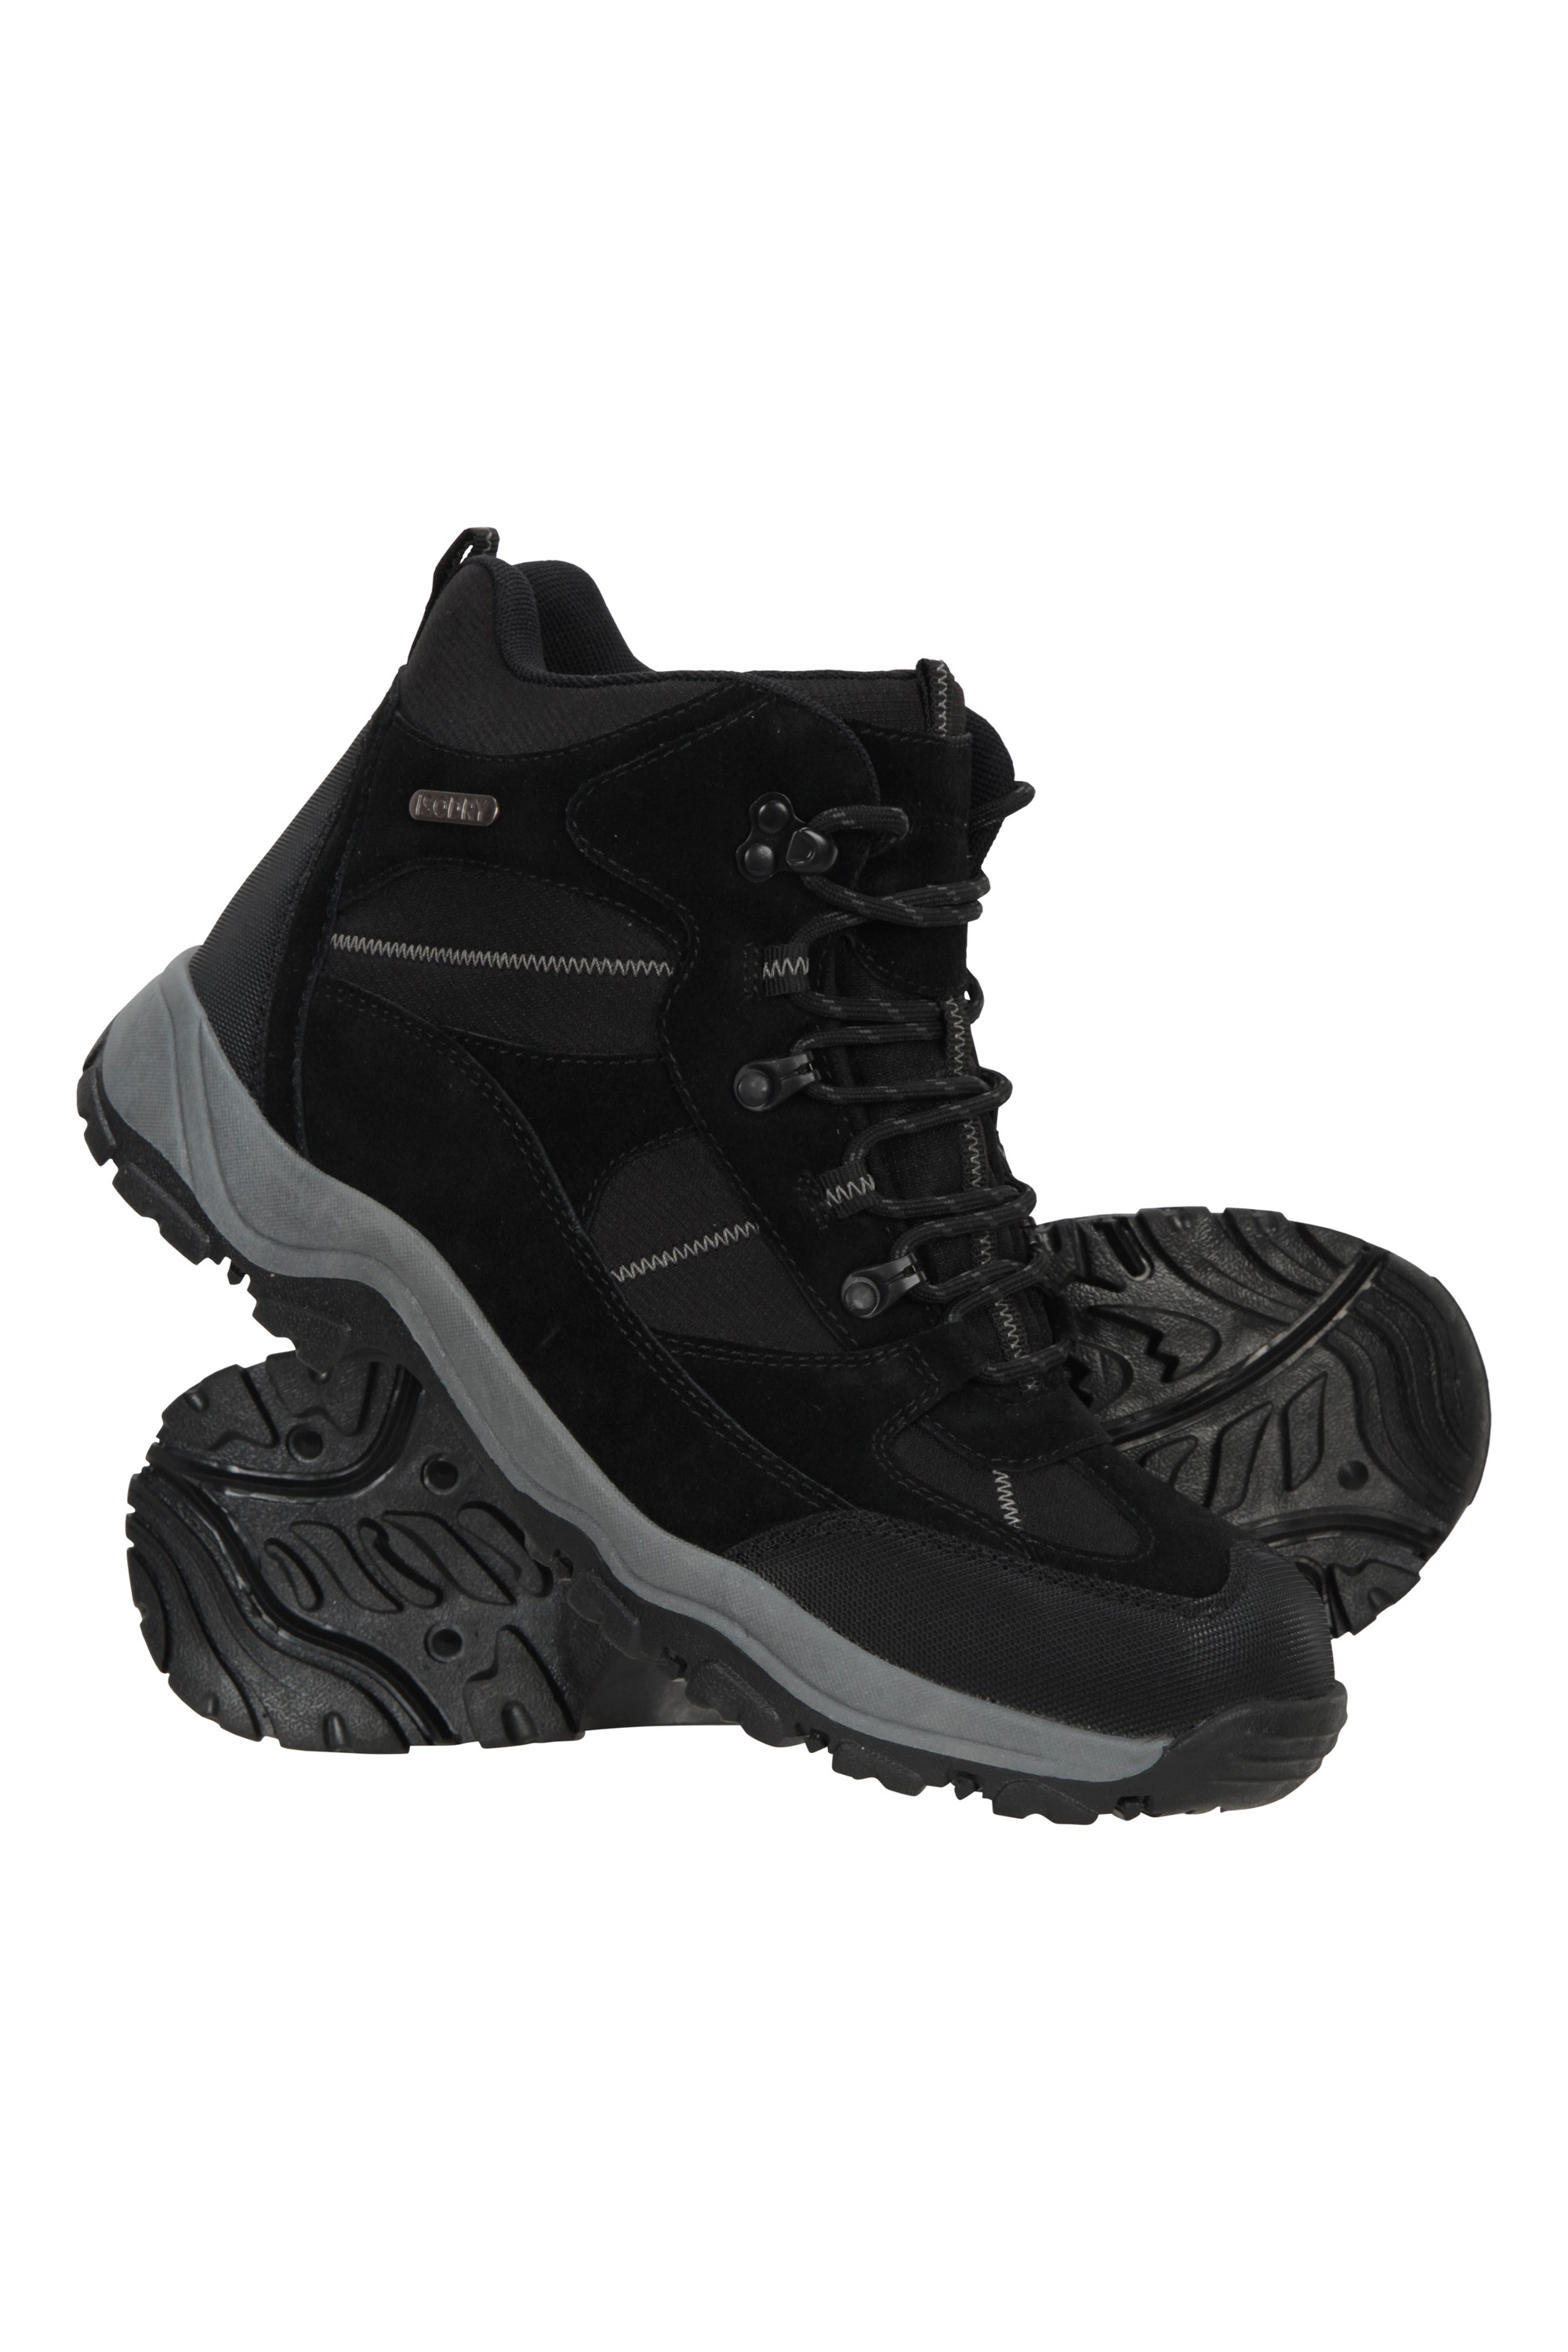 Mountain Warehouse BNIB Mens Mountain Warehouse Arctic Thermal Trekking Hiking Boots Sz 8 RRP £119 